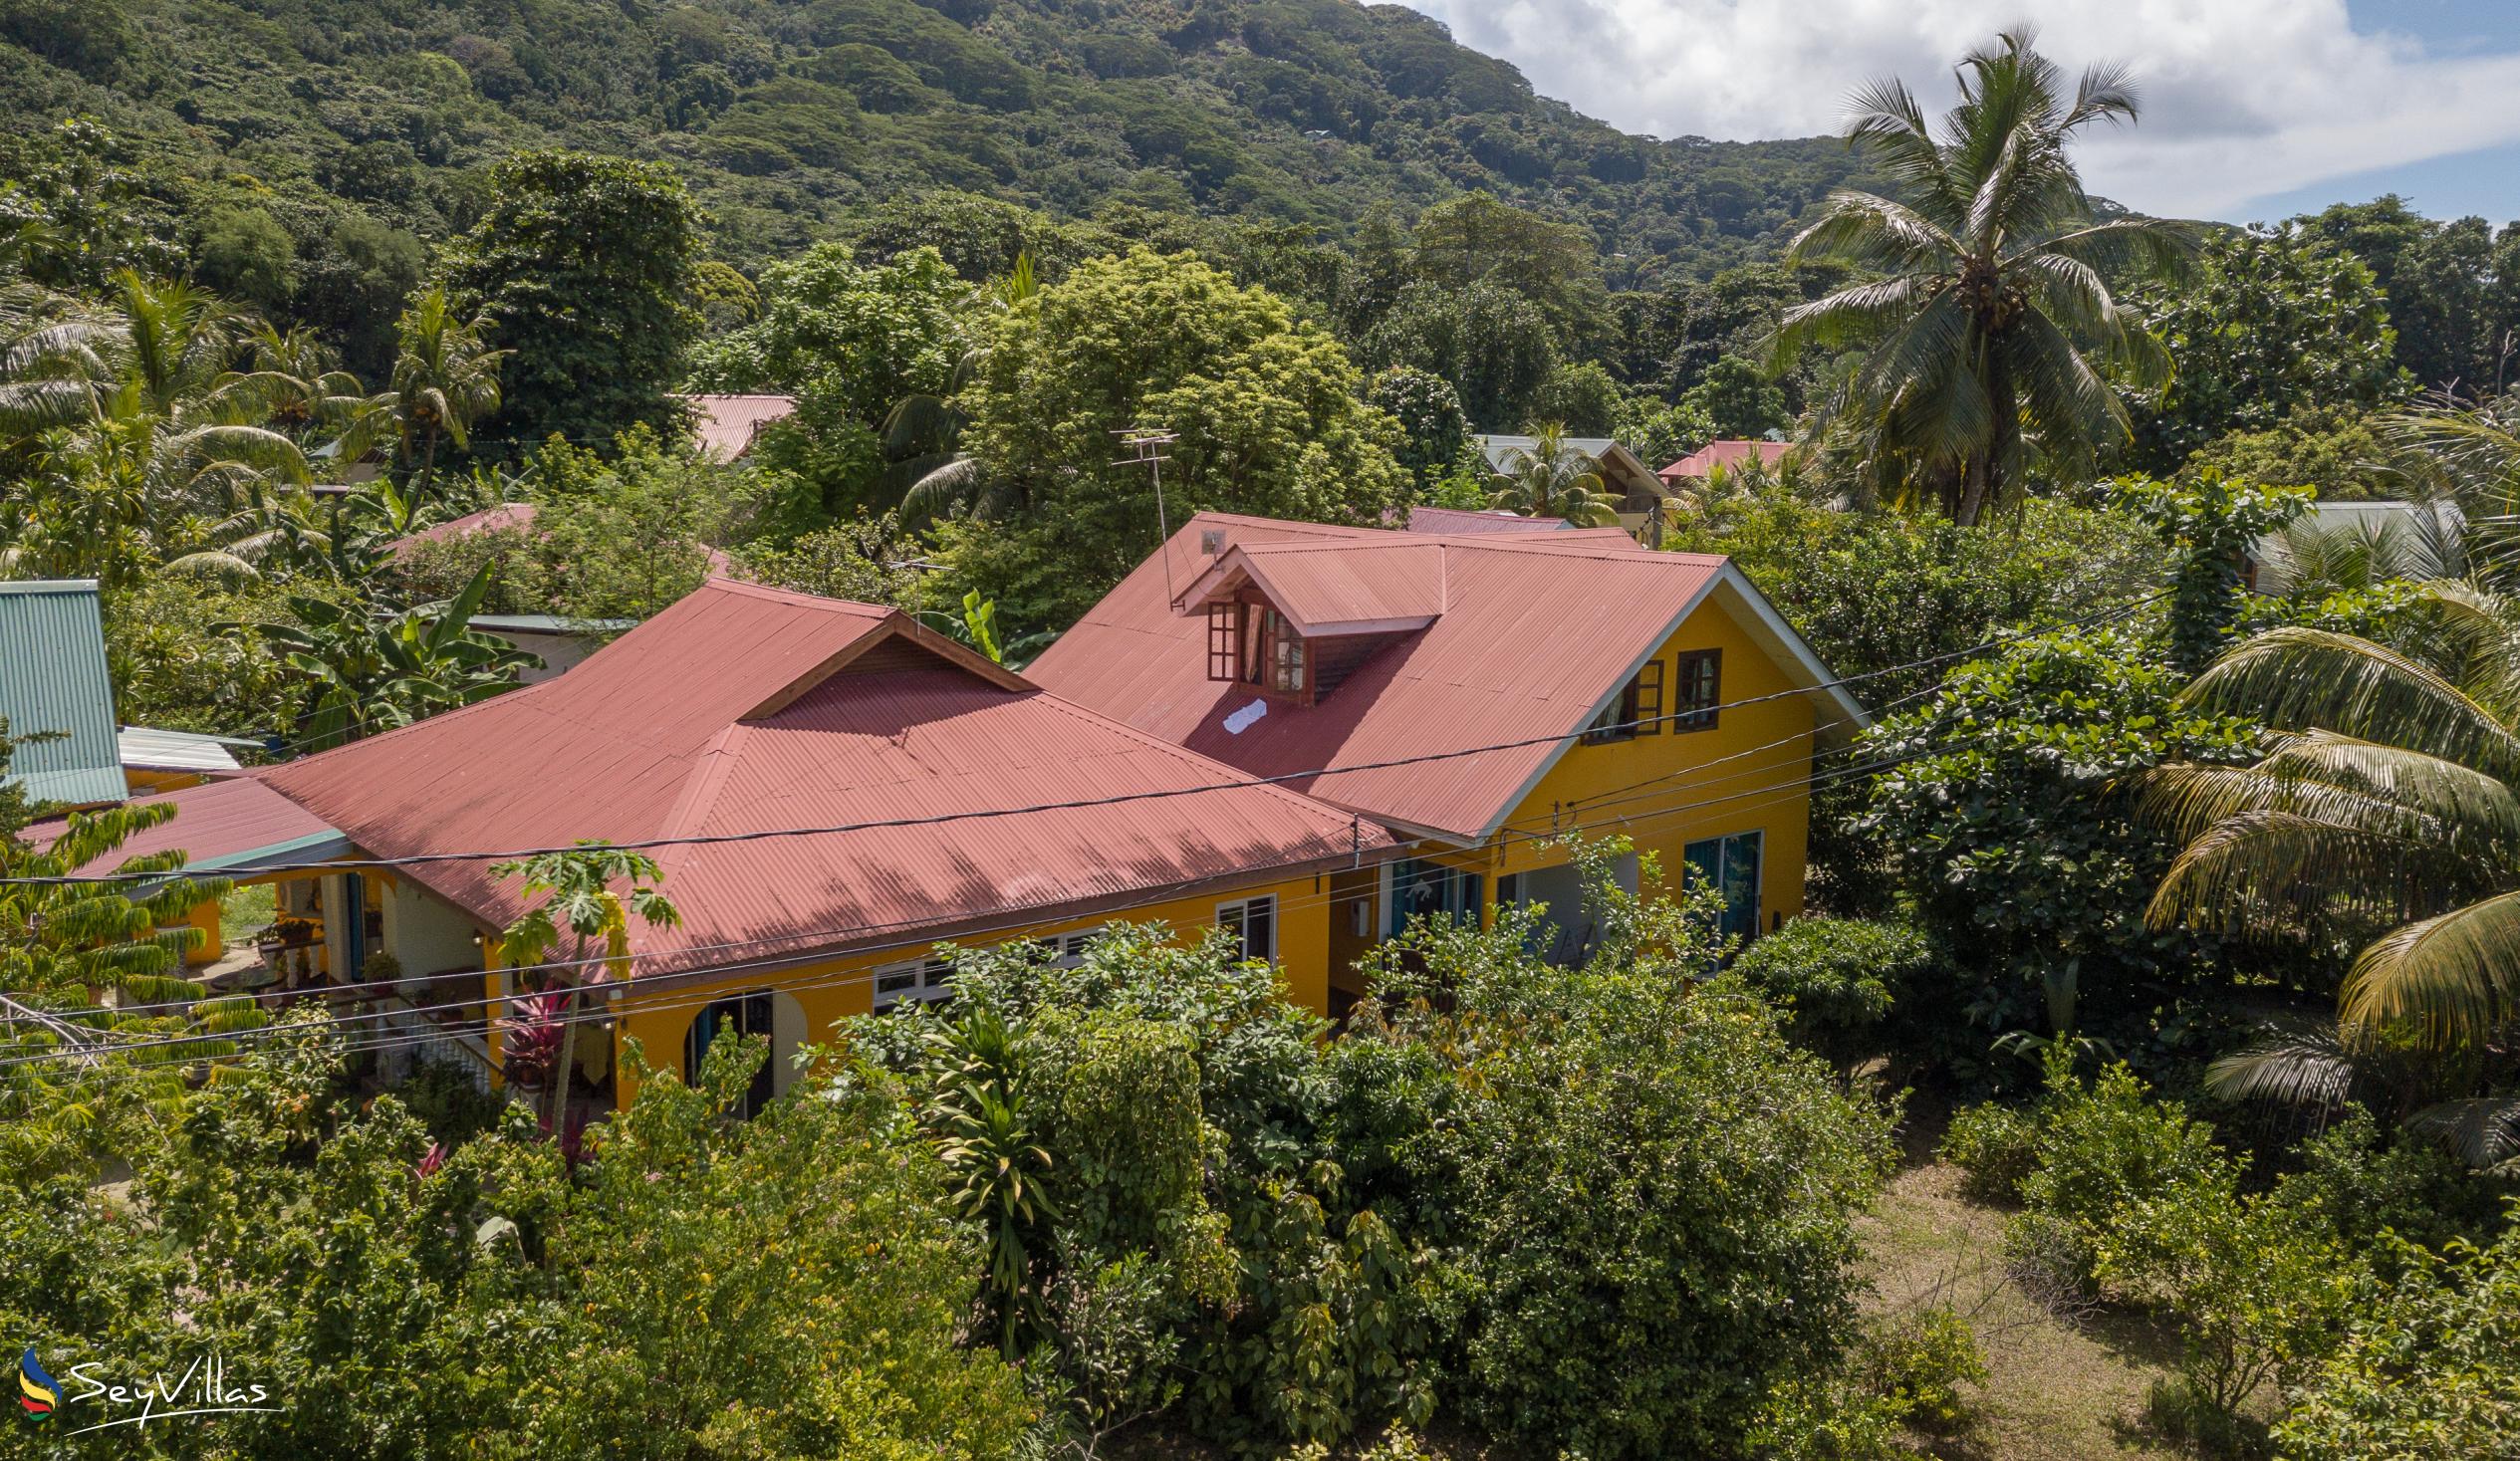 Foto 4: Chez Mera Self Catering - Aussenbereich - La Digue (Seychellen)